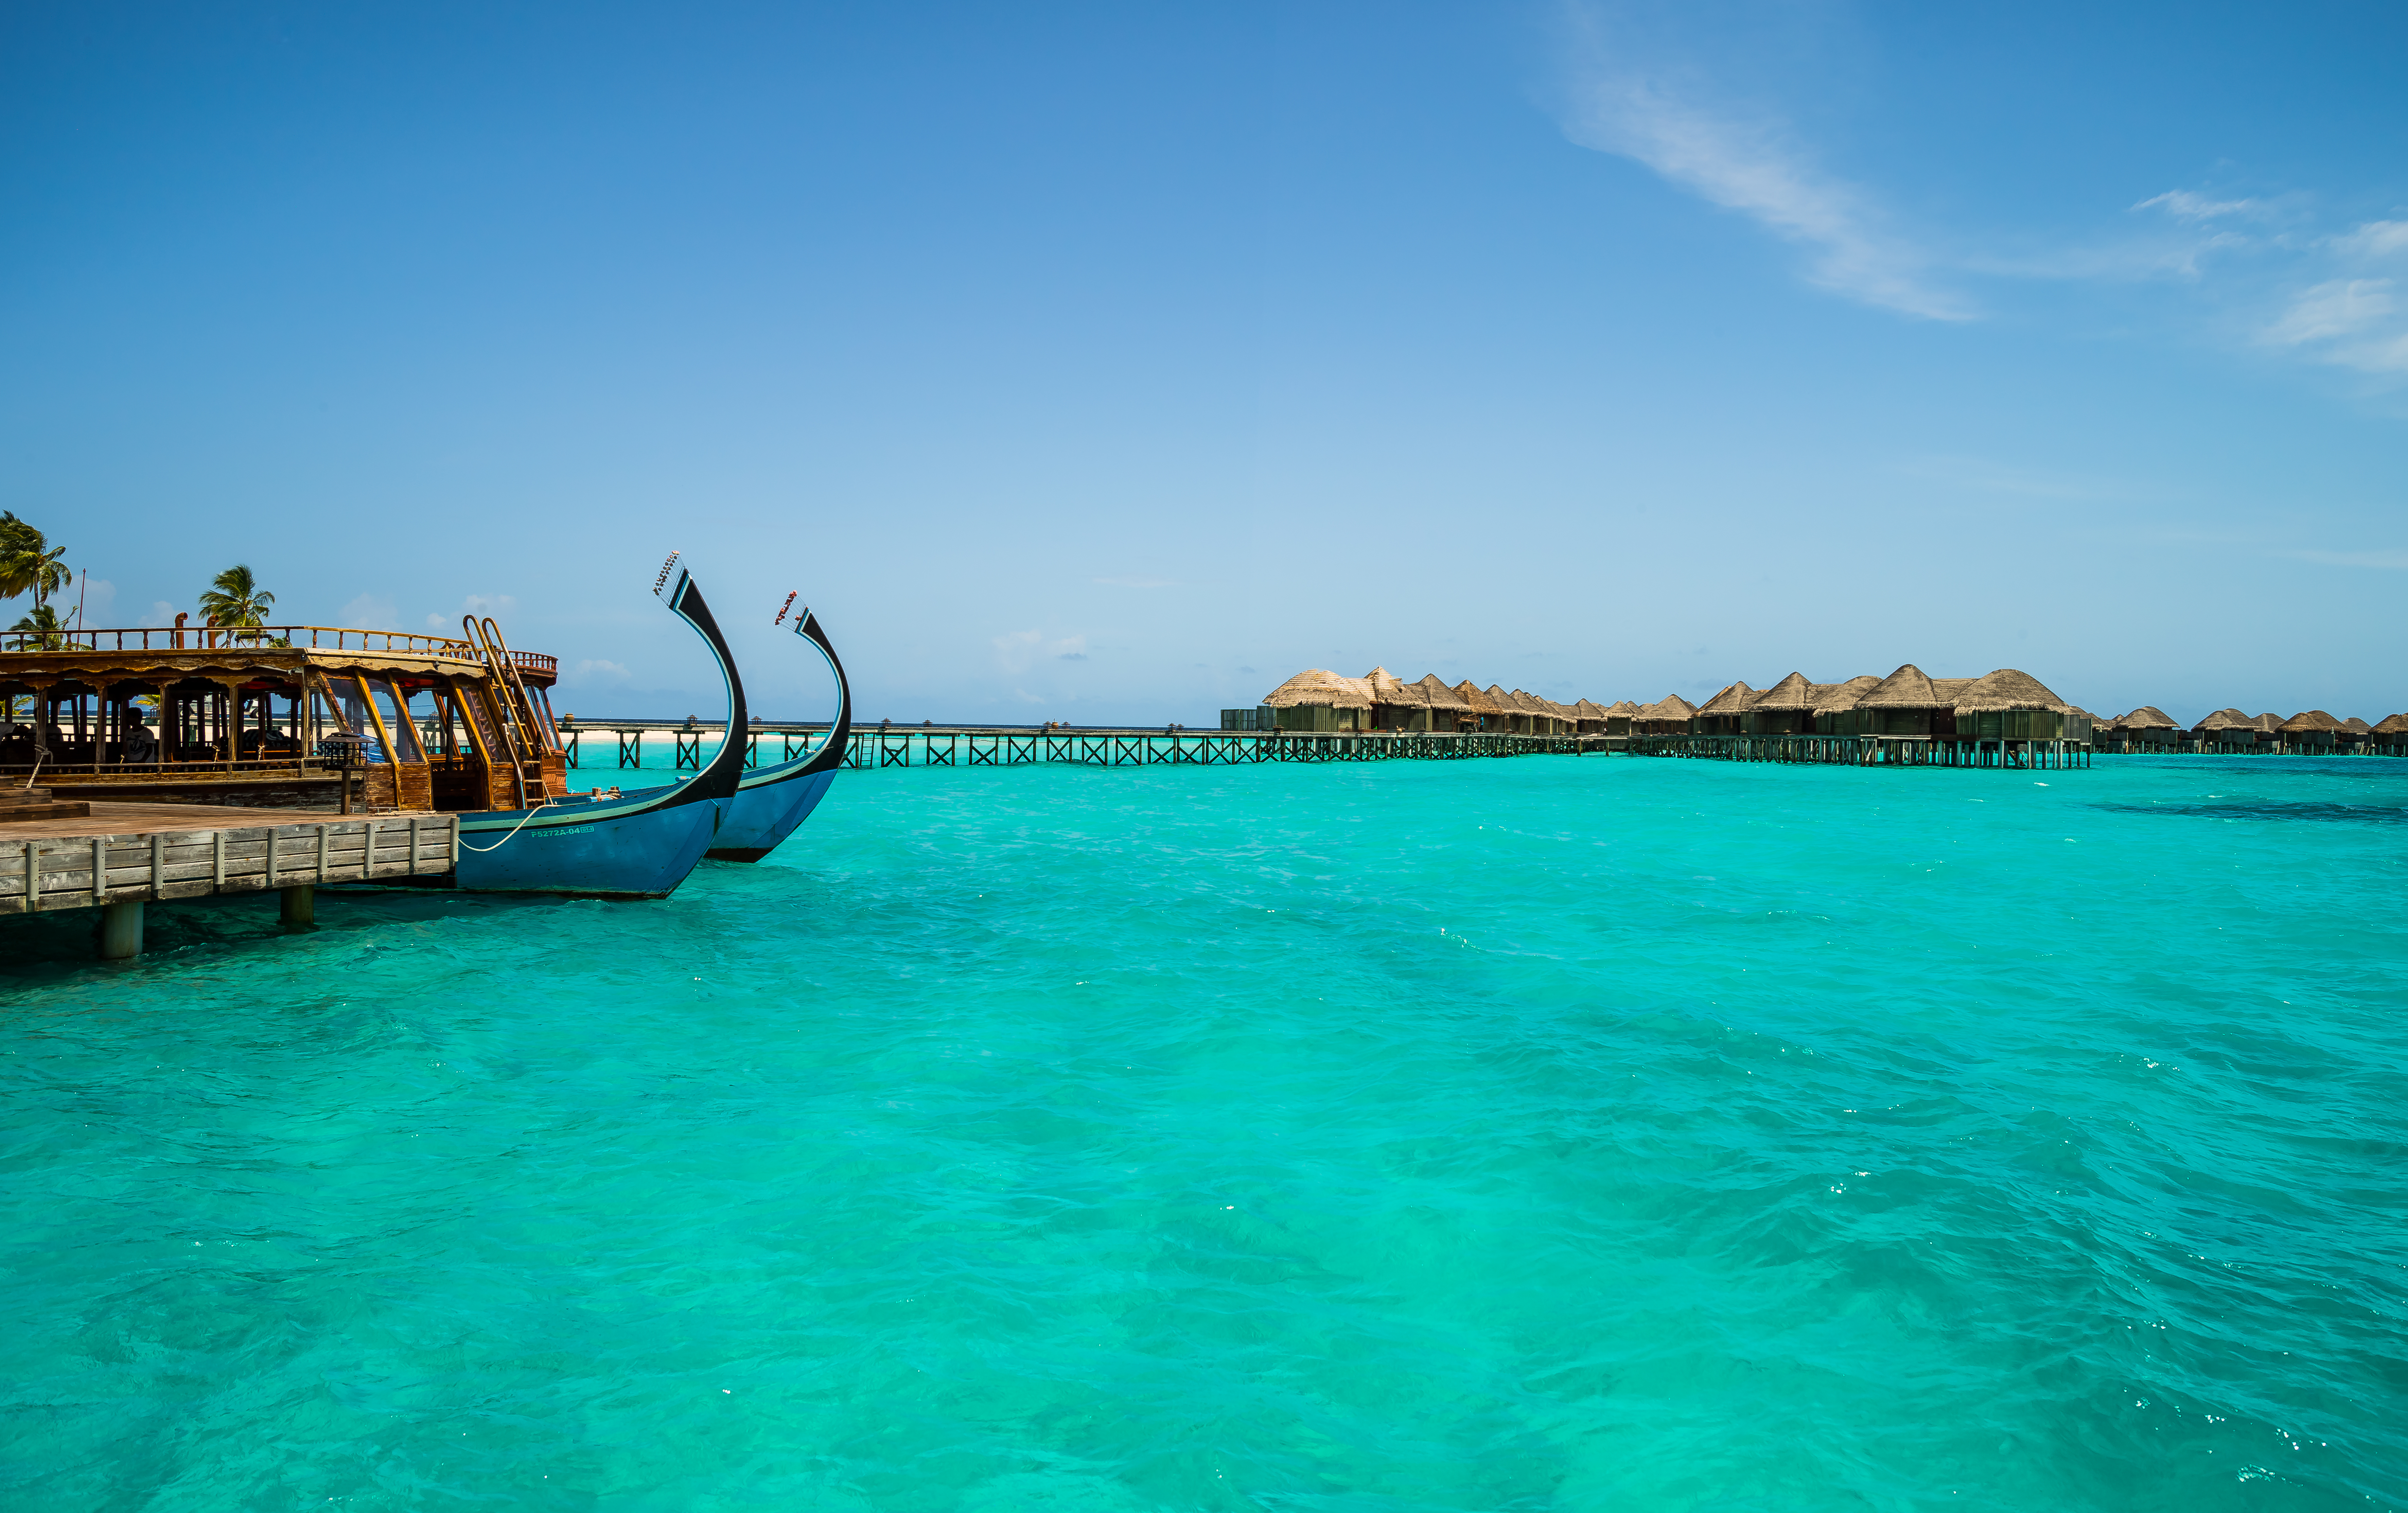 Boat Constance Halaveli Resort Hotel Lagoon Maldives Pier Resort Sea Seaside Tropics 7087x4453